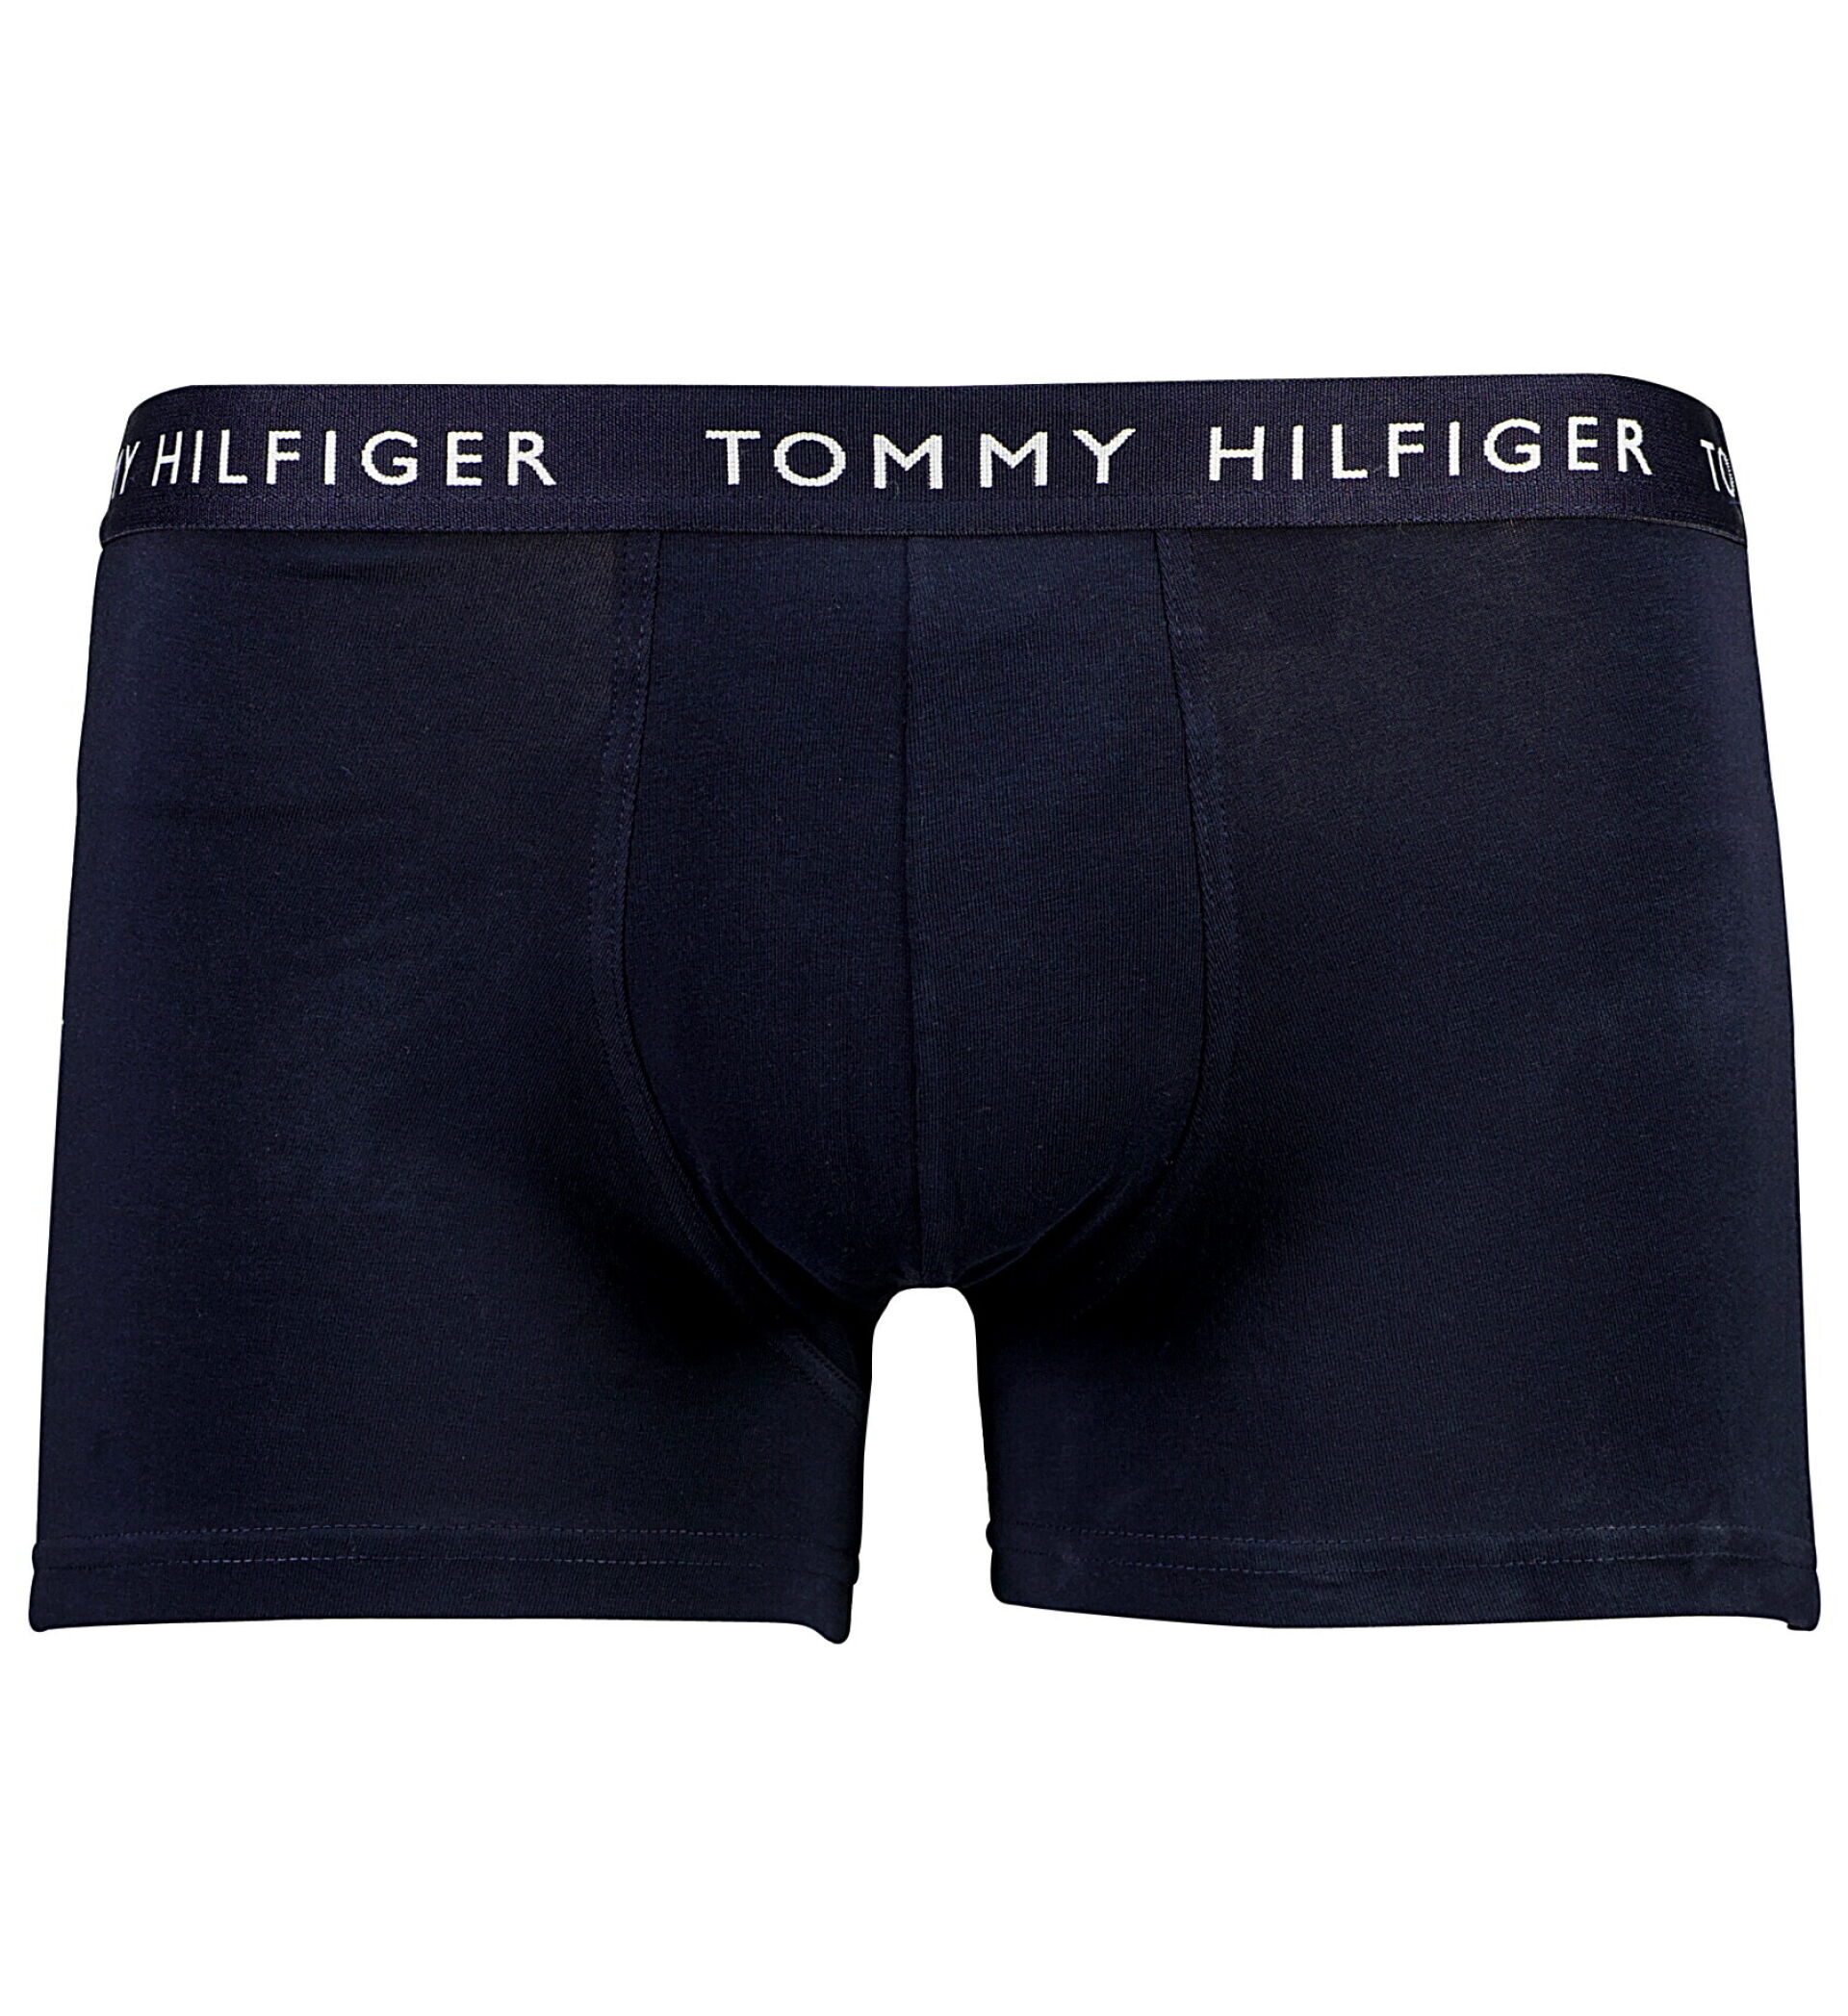 Tommy Hilfiger  Tights 90-900793